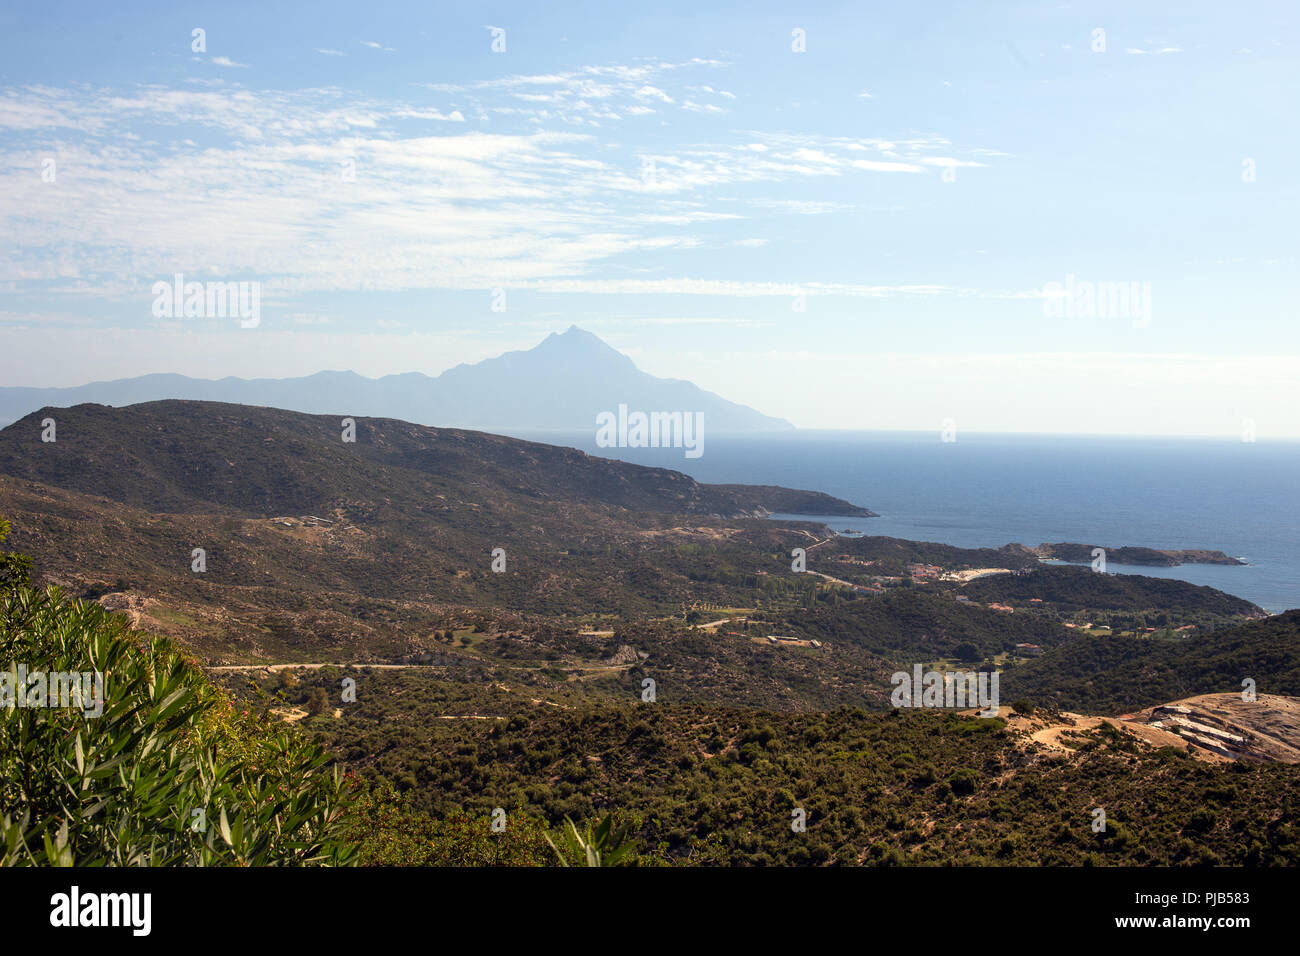 Mount Athos from Kalamatsi viewpoint Halkidiki, Greece Stock Photo